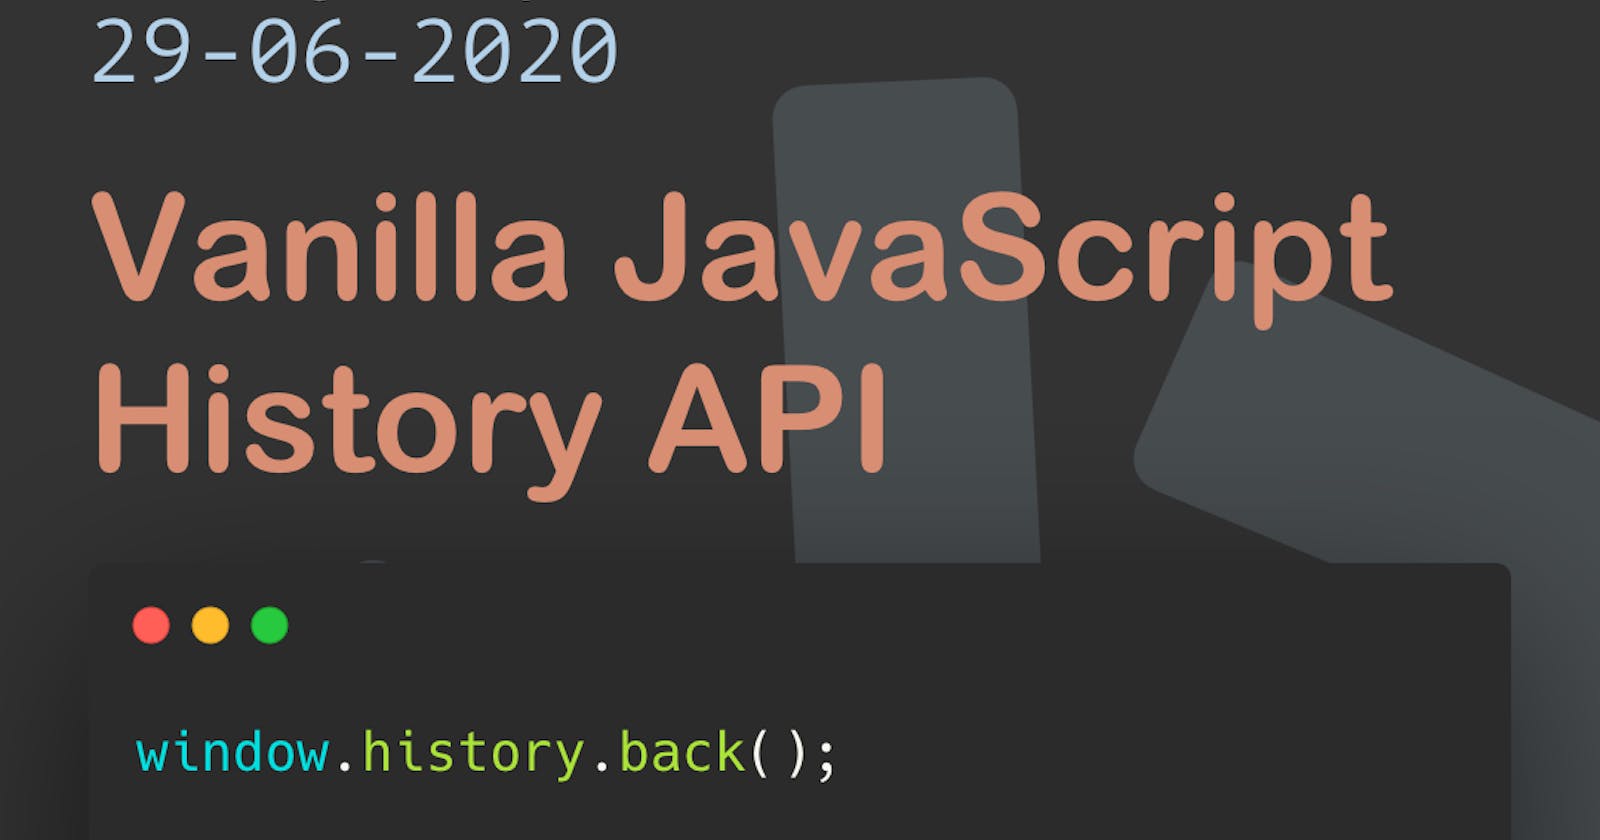 Vanilla JavaScript History API